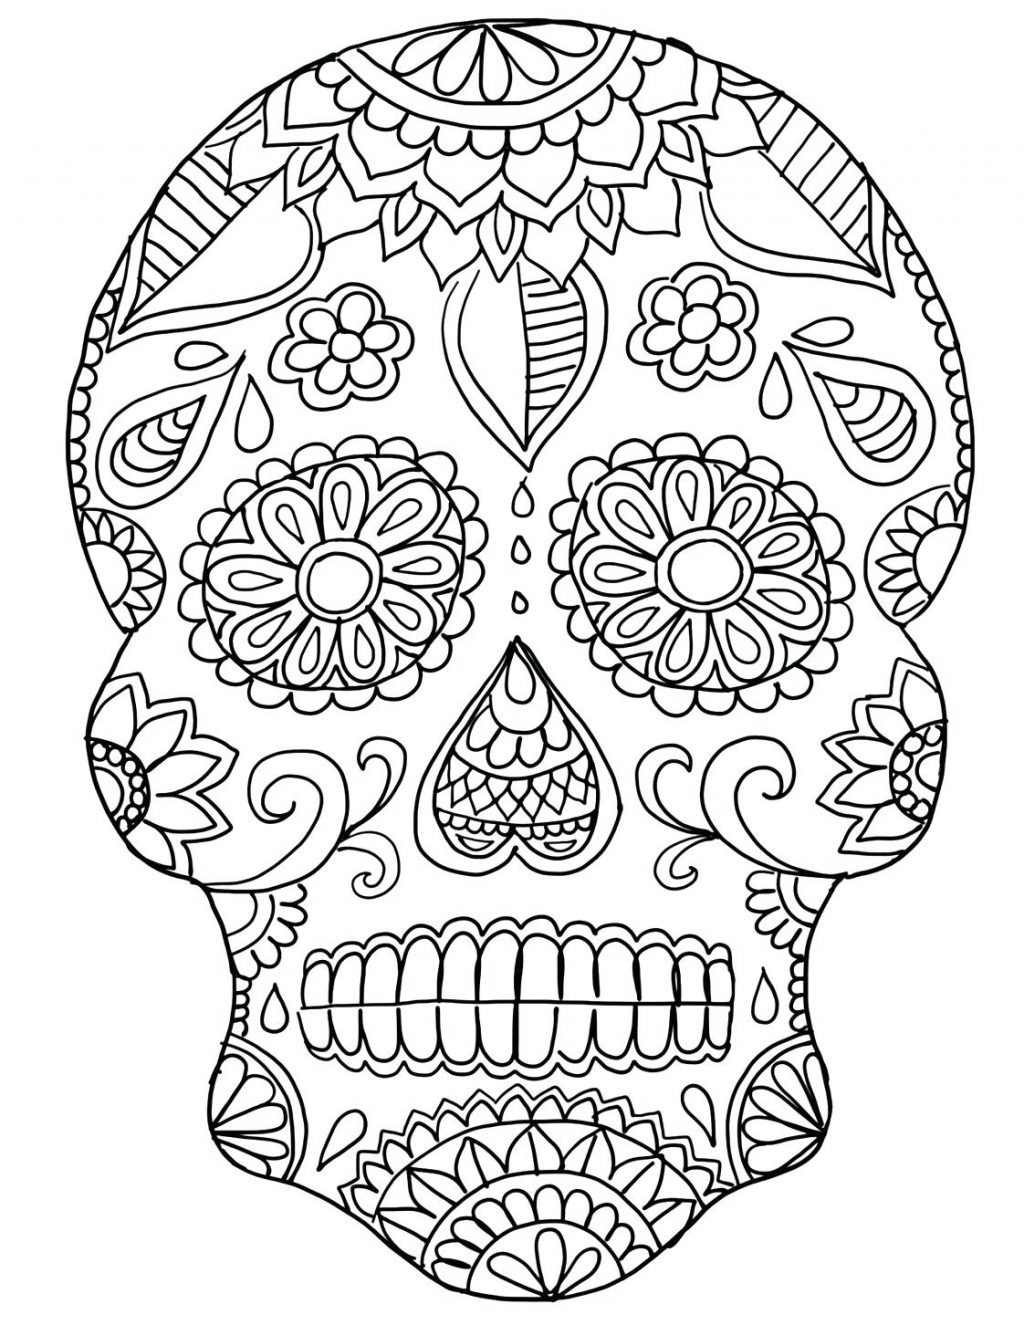 Printable Sugar Skulls Coloring Pages
 Day The Dead Skulls Drawing at GetDrawings